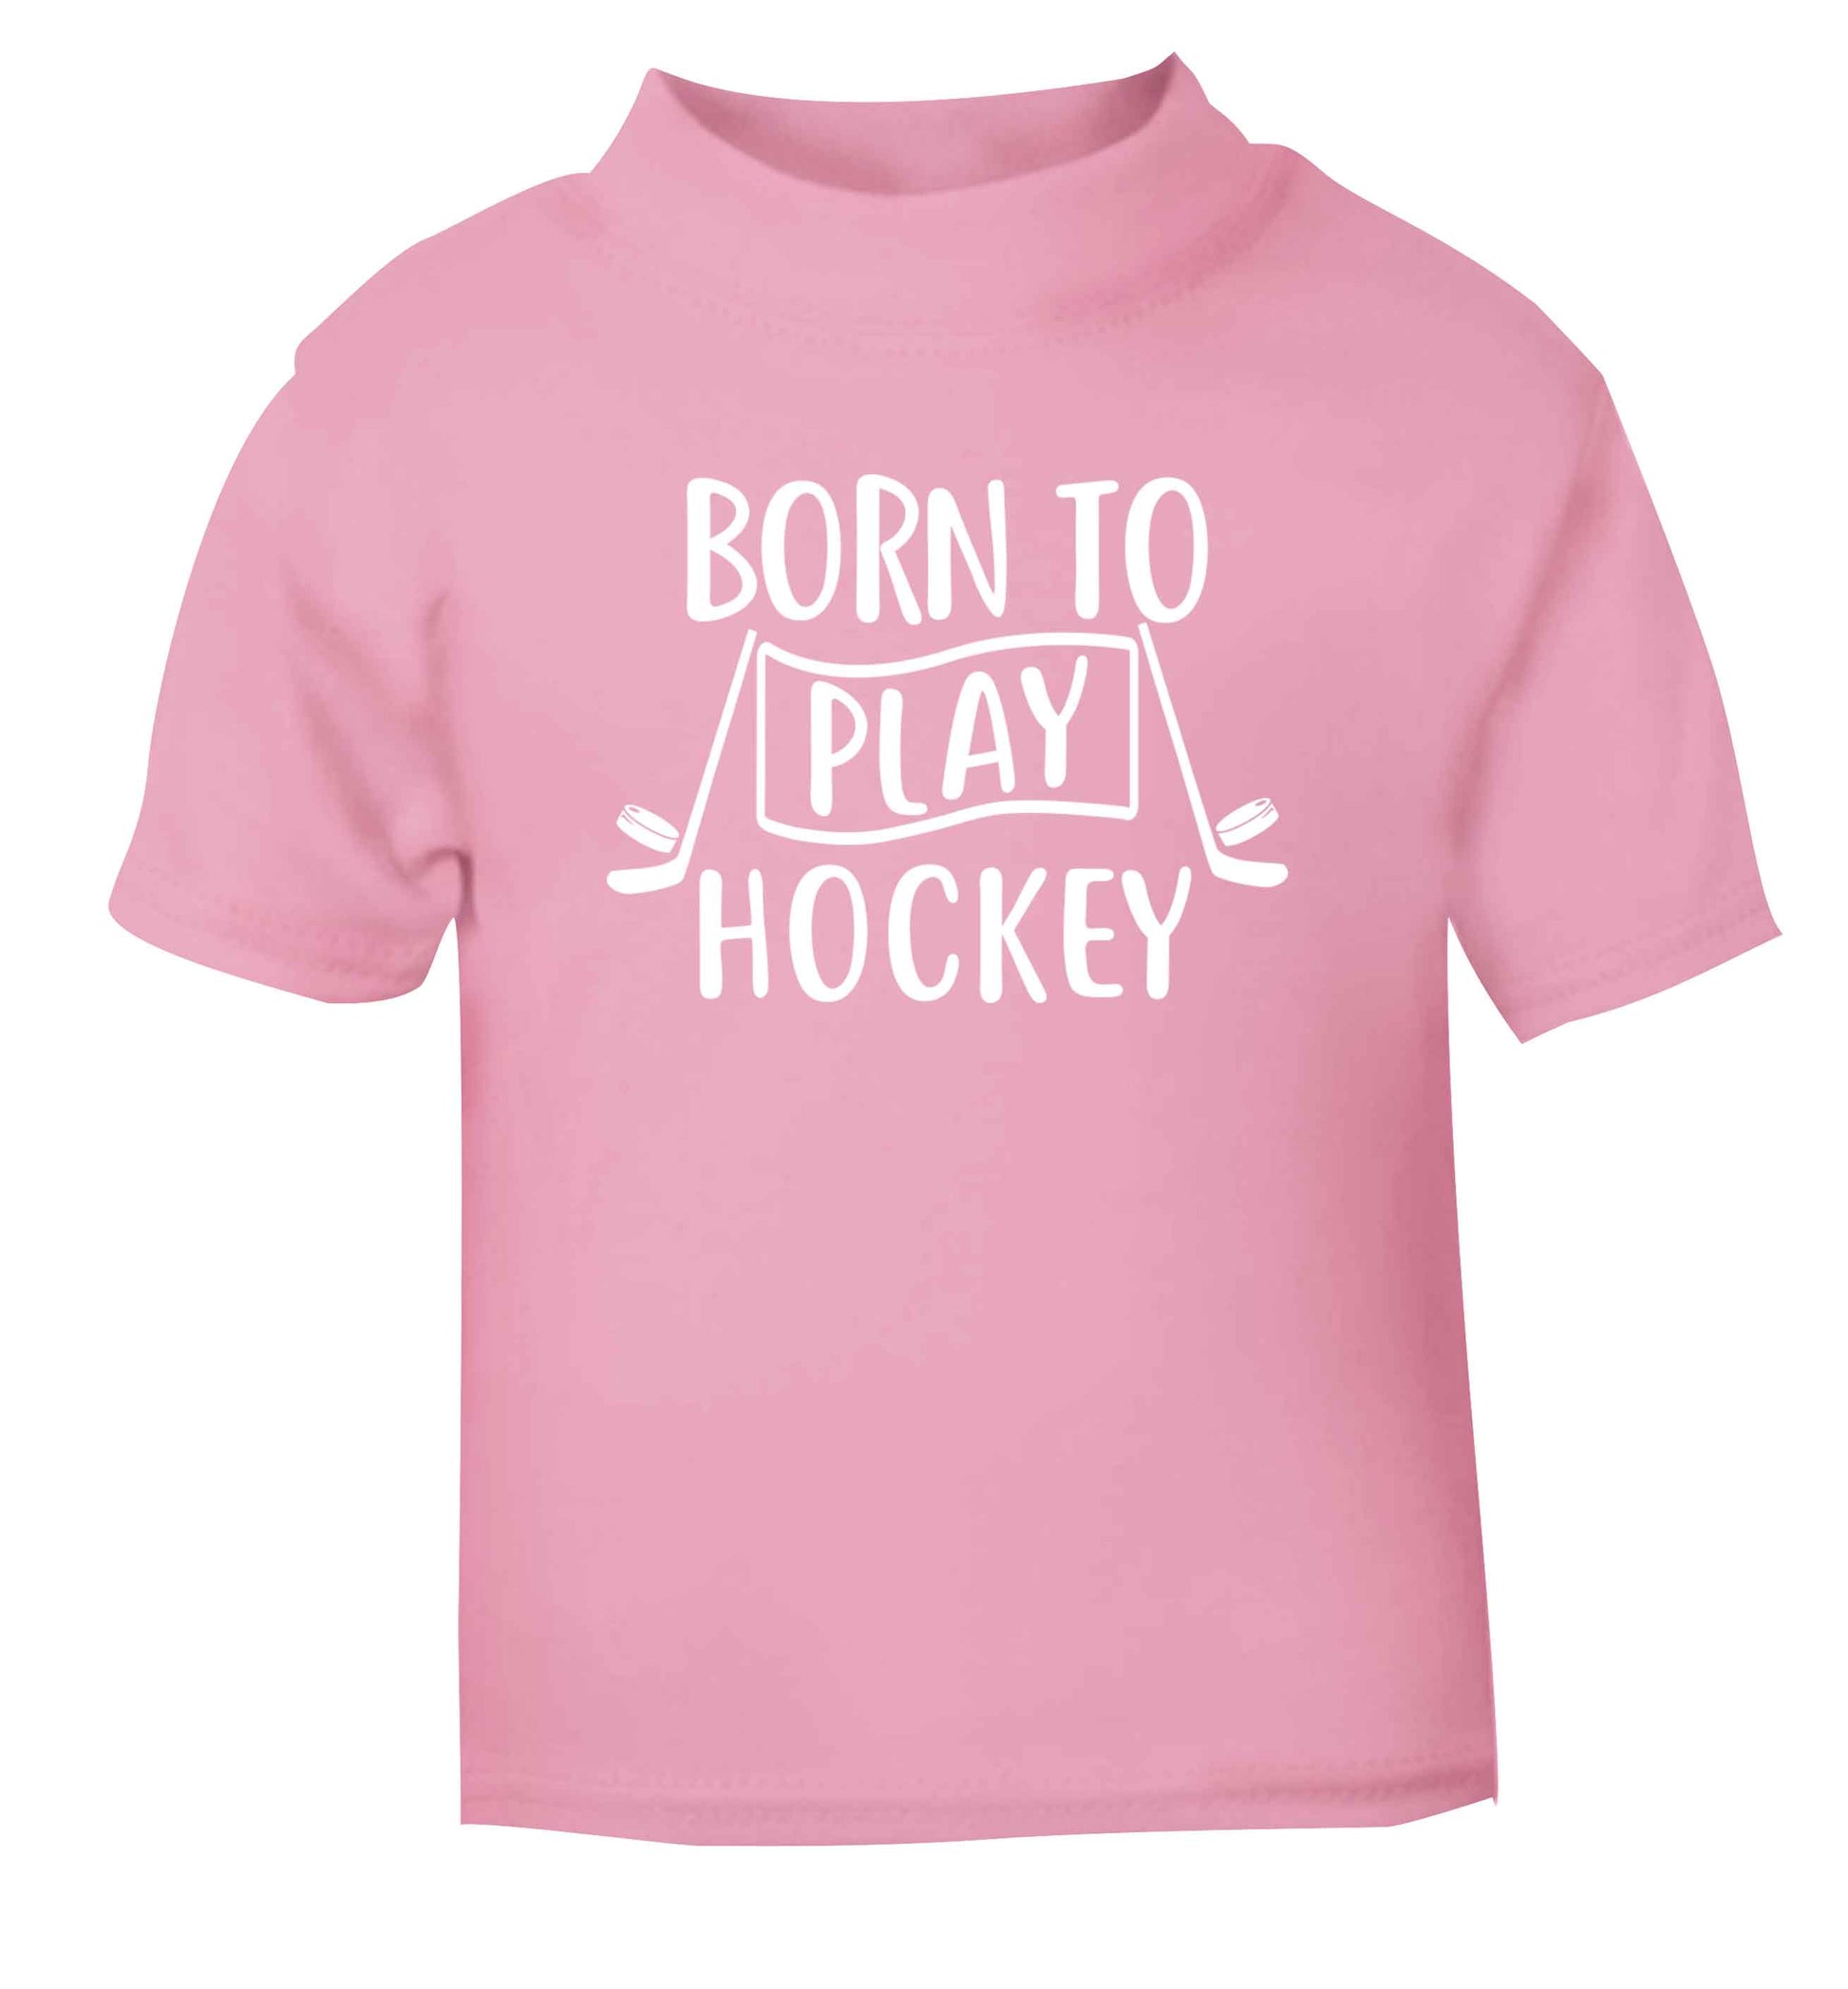 Born to play hockey light pink Baby Toddler Tshirt 2 Years